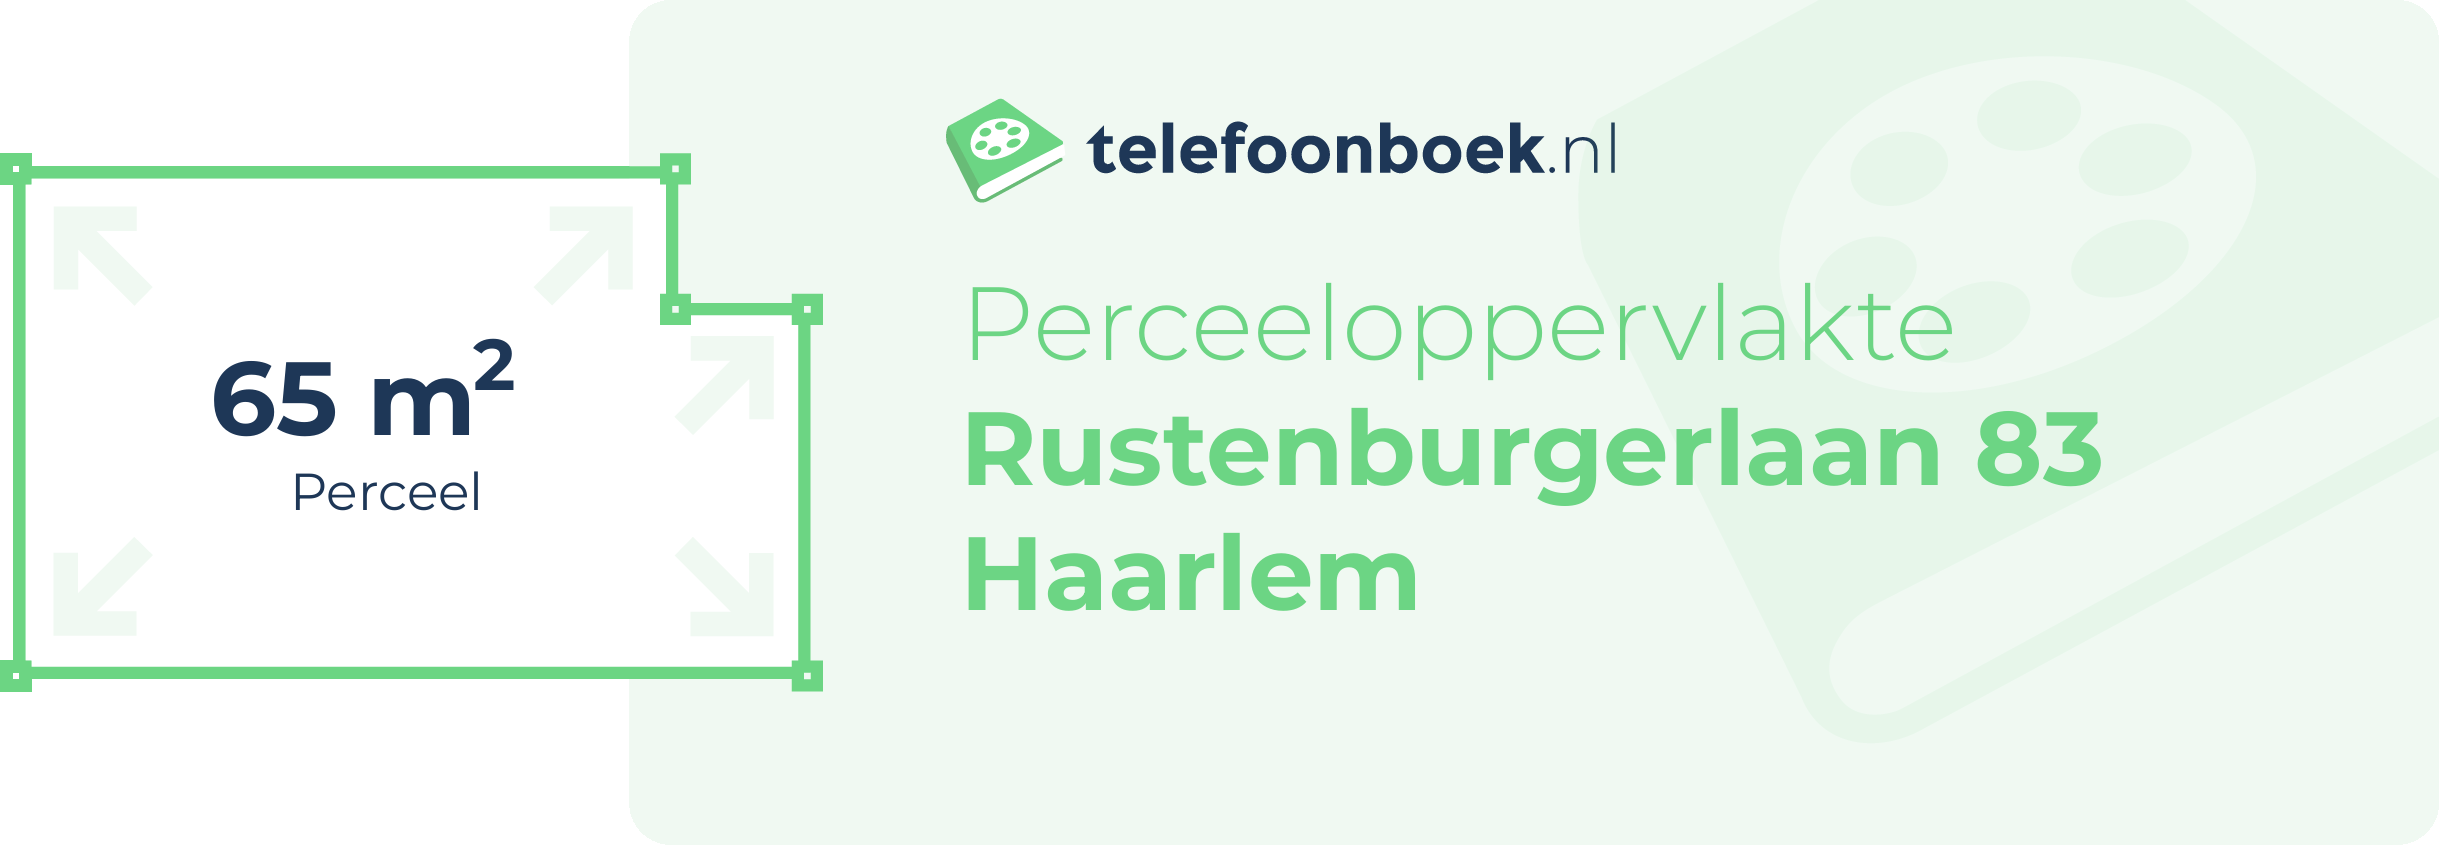 Perceeloppervlakte Rustenburgerlaan 83 Haarlem